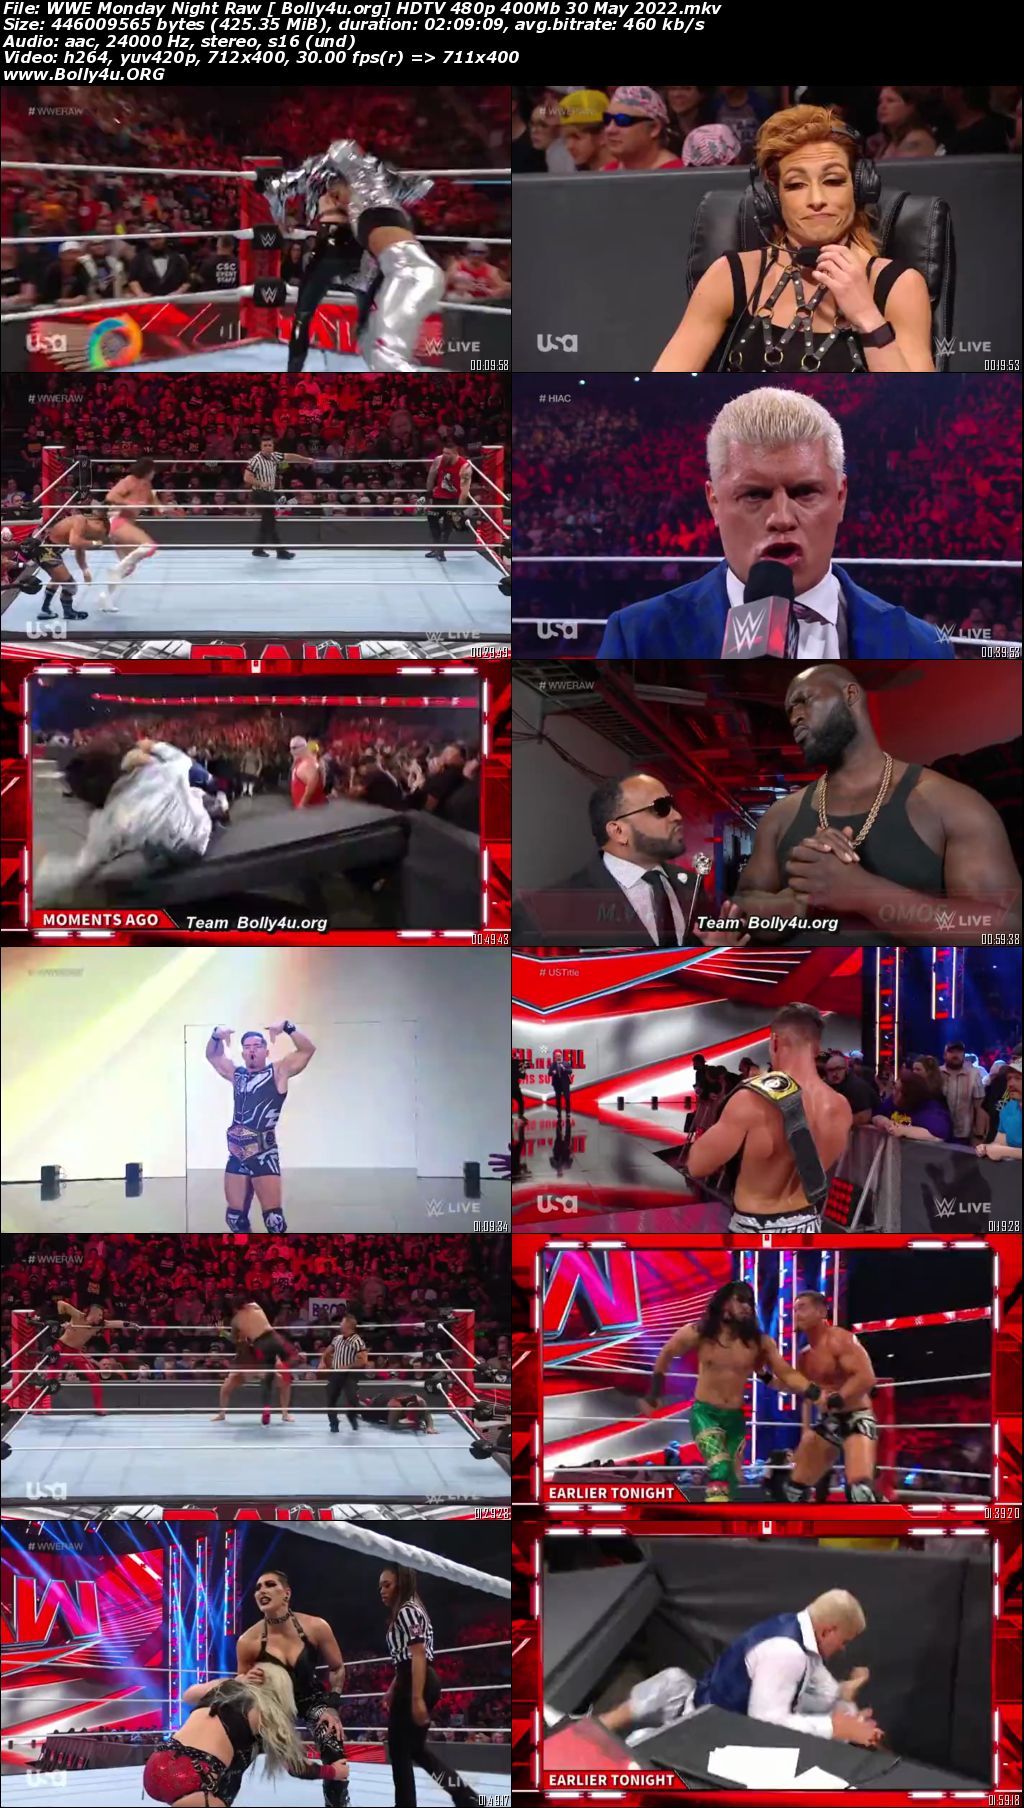 WWE Monday Night Raw HDTV 480p 400Mb 30 May 2022 Download